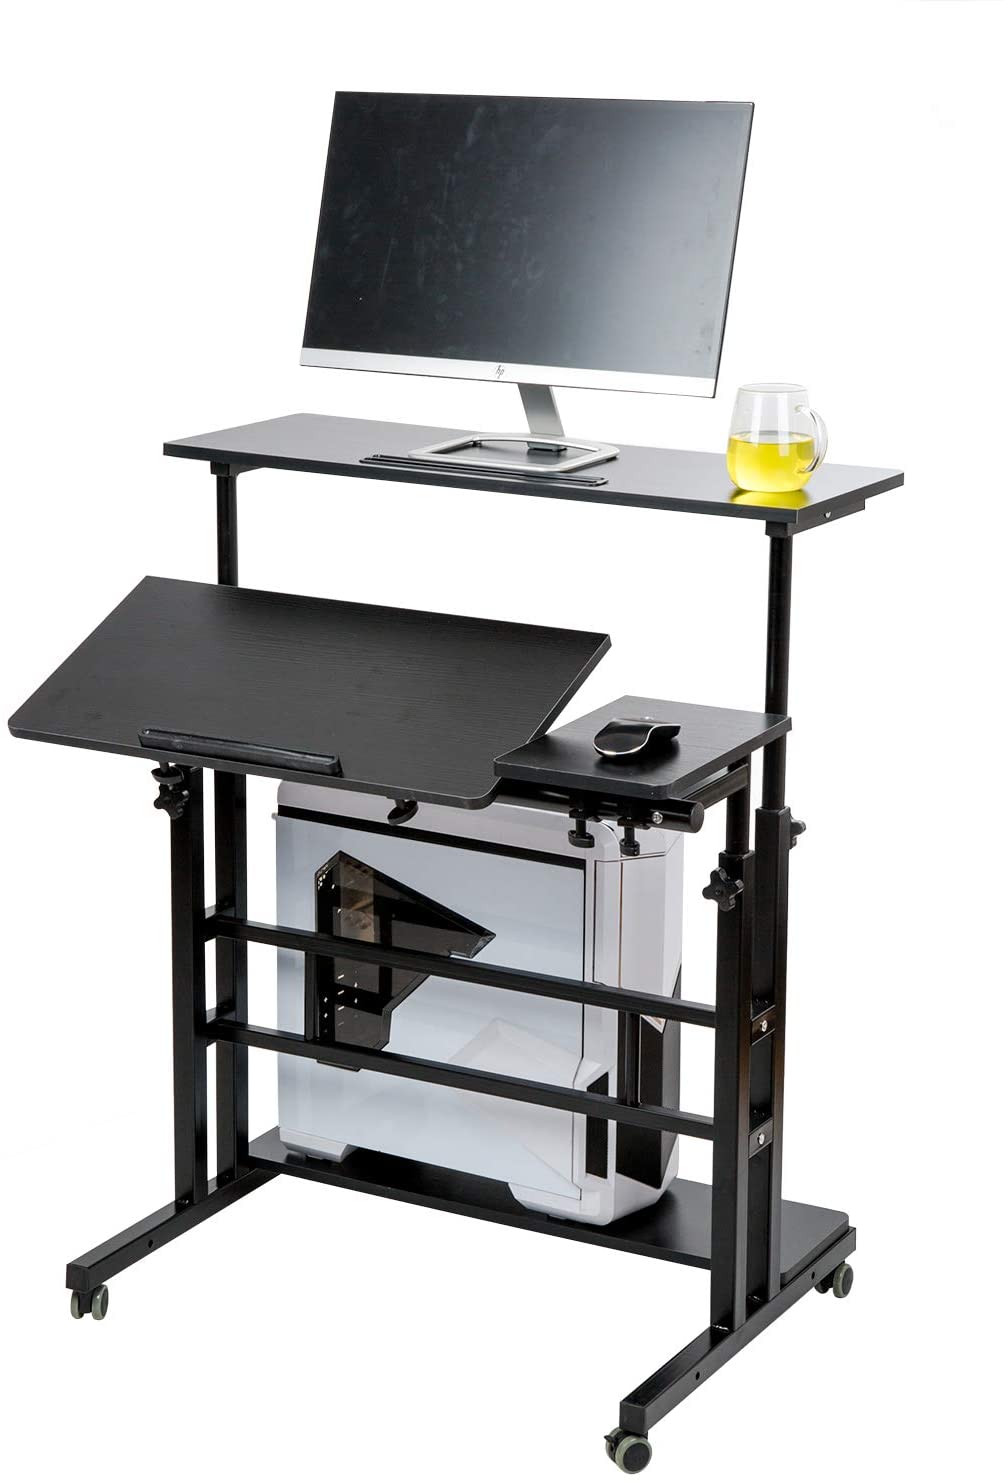 Mobile Stand Up Desk, Adjustable Laptop Desk with Wheels Storage Desk Home Office Workstation, Rolling Table Laptop Cart for Standing or Sitting